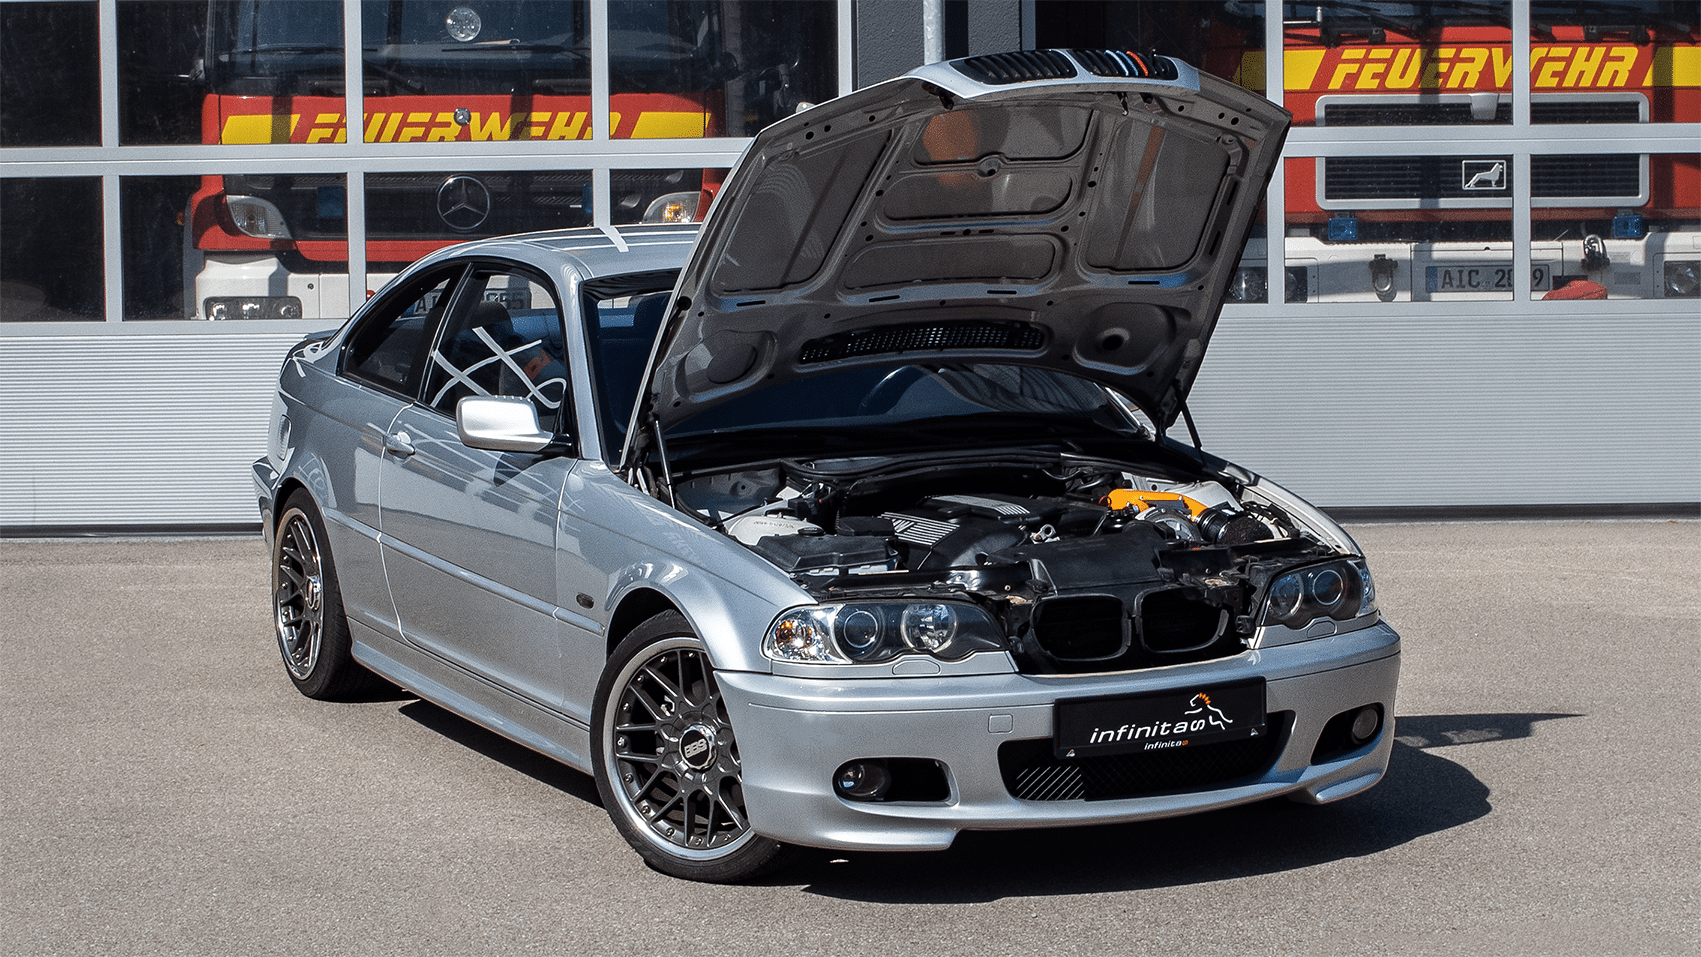 BMW E46 Tuner - infinitas - Impressive performance in the E46 - infinitas